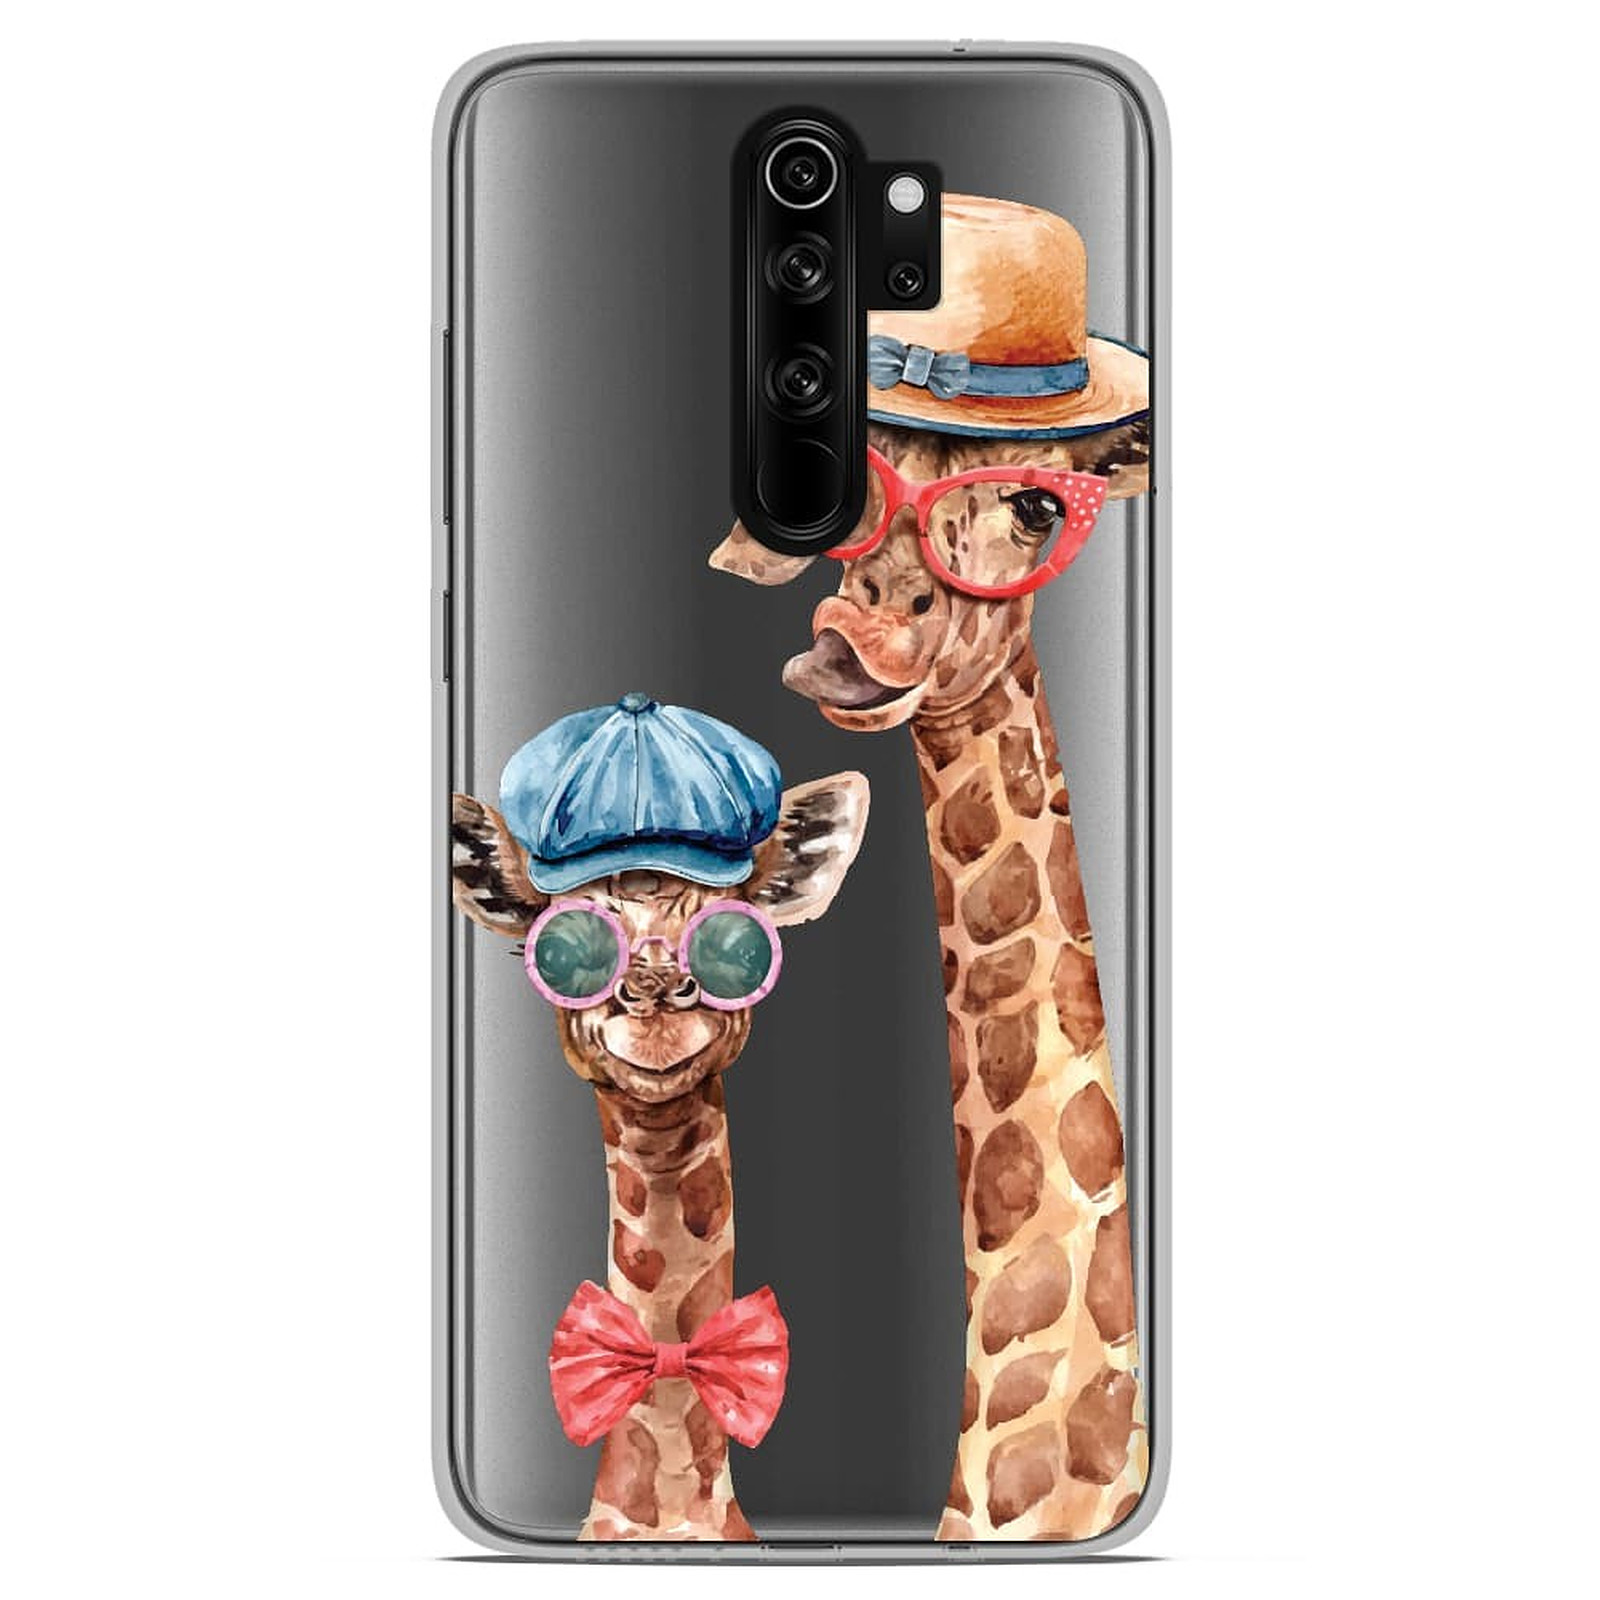 1001 Coques Coque silicone gel Xiaomi Redmi Note 8 Pro motif Funny Girafe - Coque telephone 1001Coques